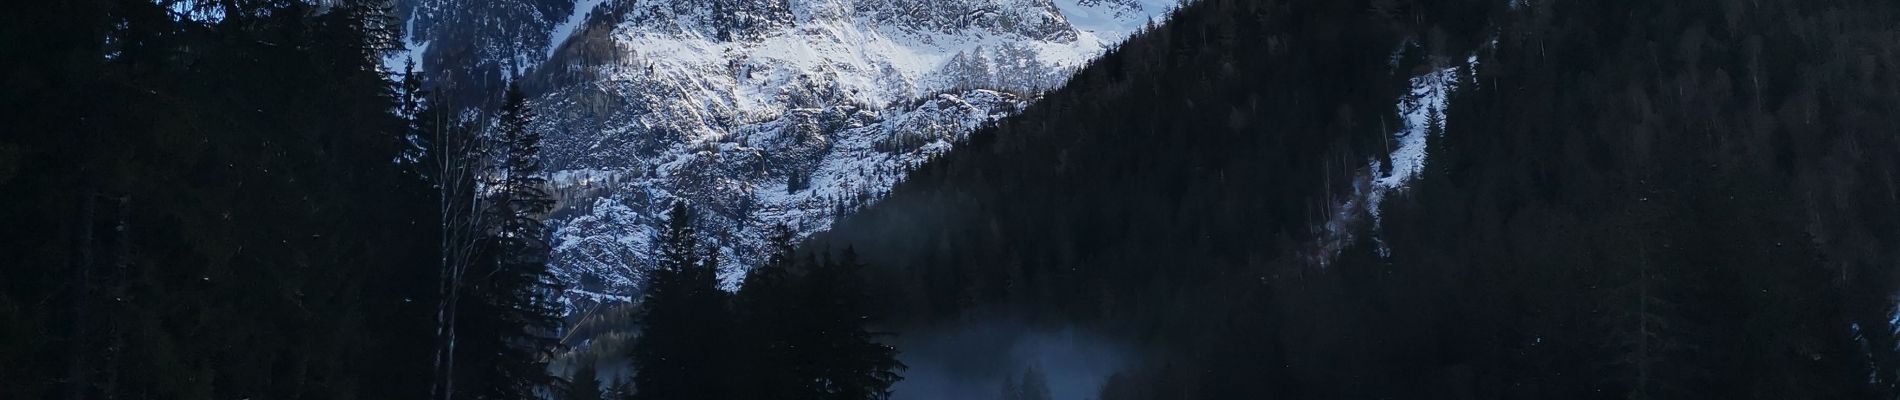 Tour Wandern Chamonix-Mont-Blanc - CHAMONIX... depuis l' Arveyron jusqu'à la Floria.  - Photo